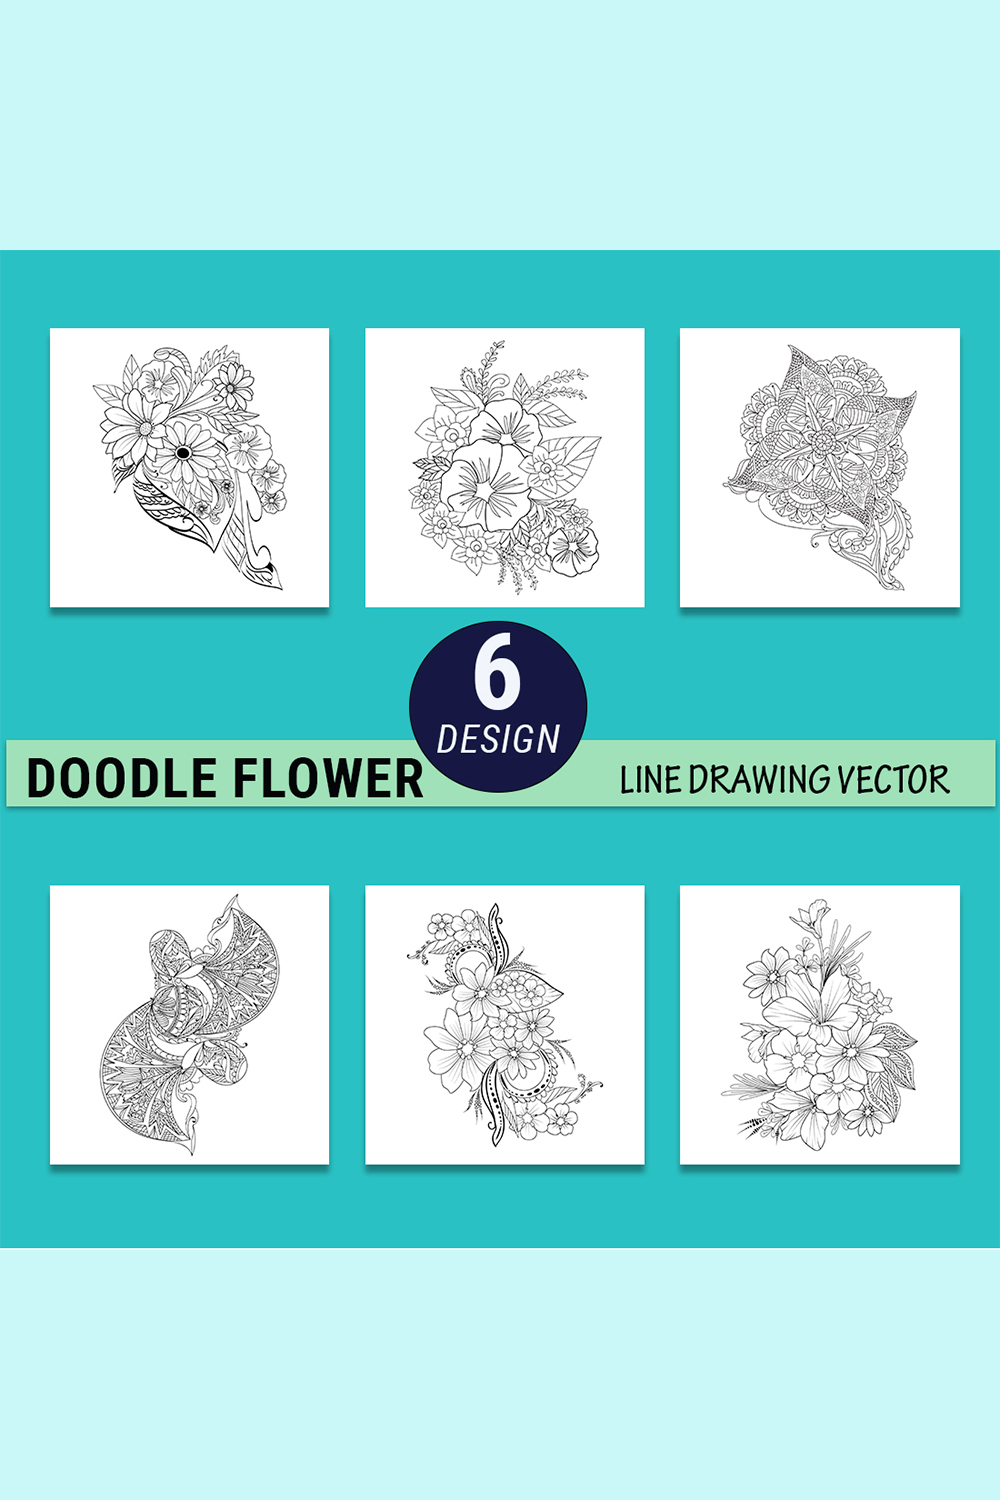 Doodle flower art, doodle flower art drawing, doodle flower drawing, flower drawing doodle art zentangle art pinterest preview image.